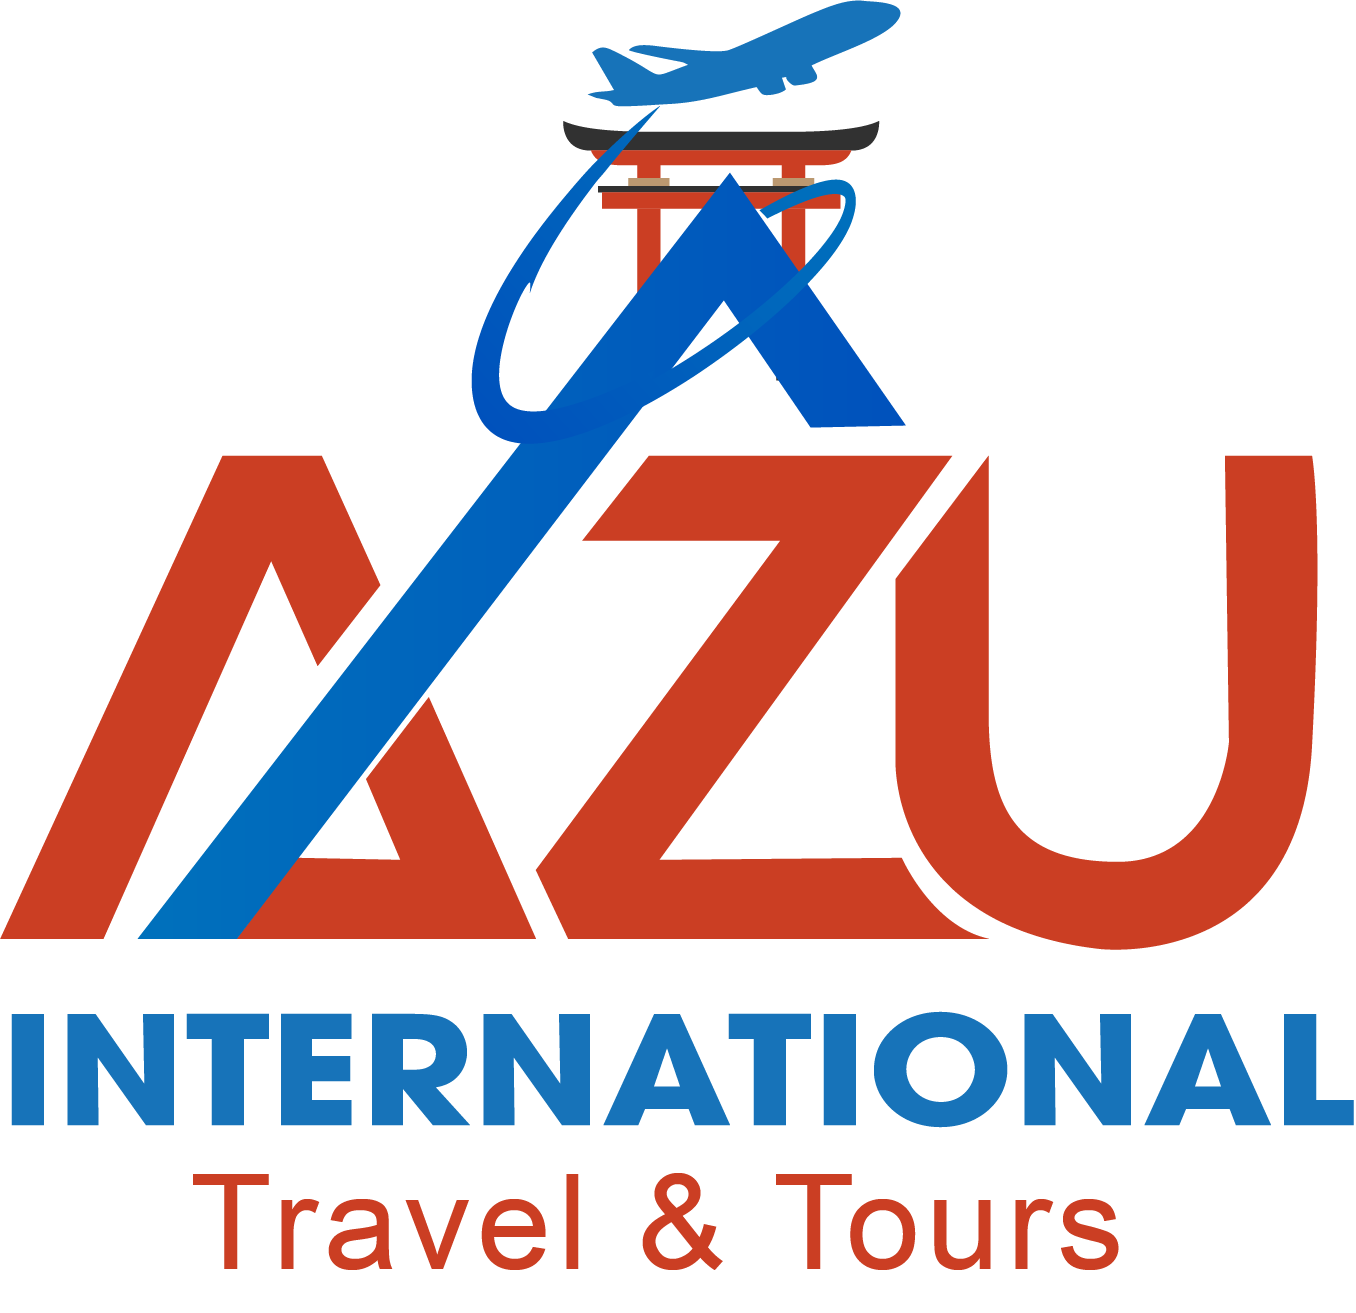 AZU International Travel & Tours